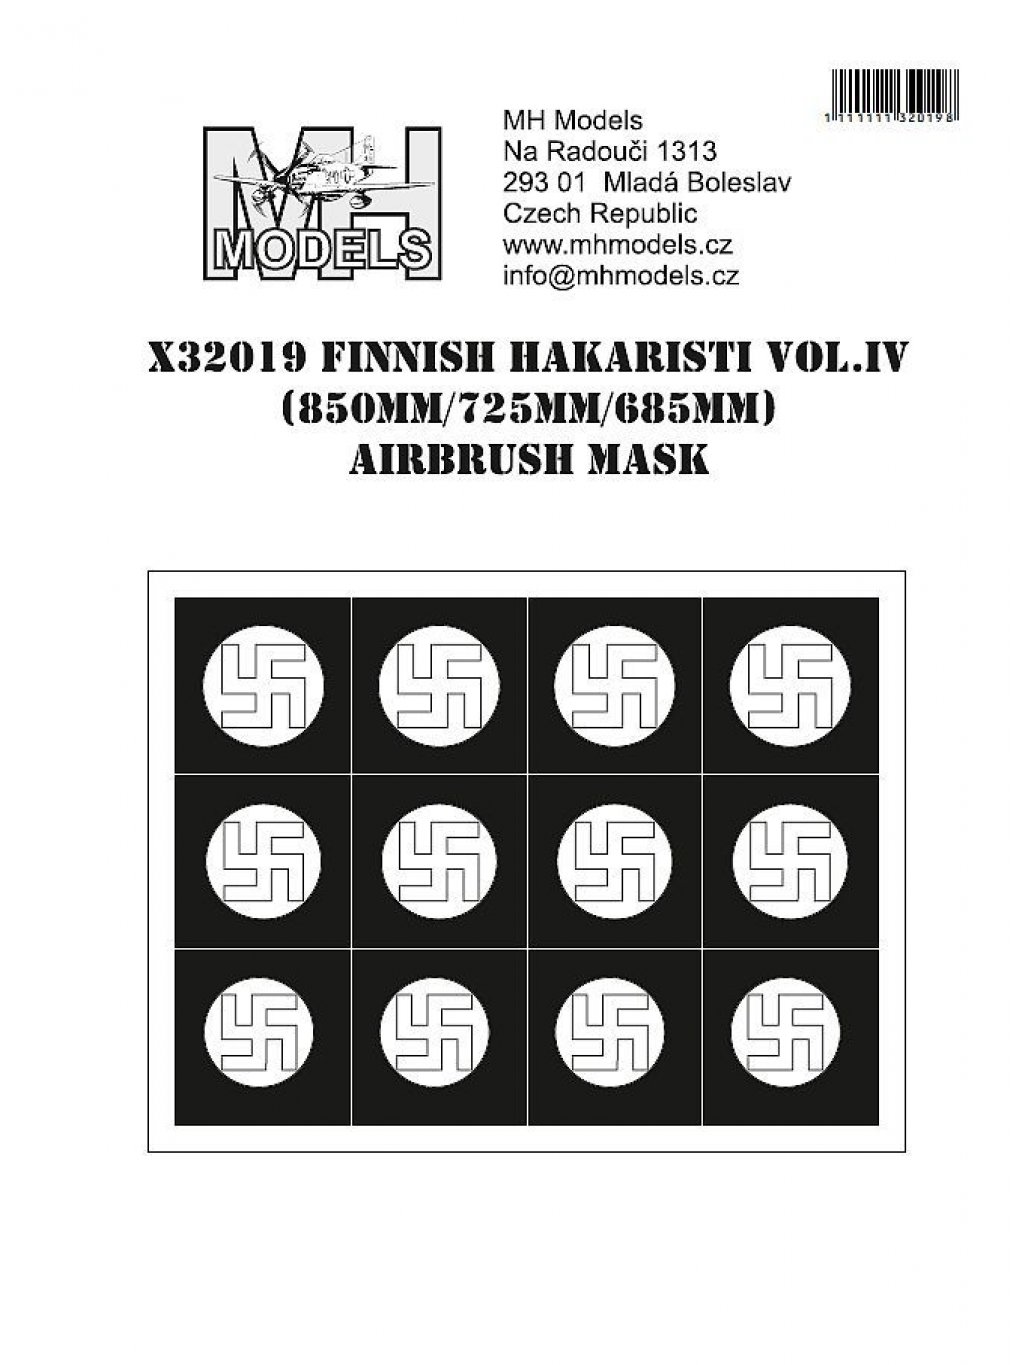 Finnish hakaristi vol.IV 850mm/725mm/685mm airbrush mask